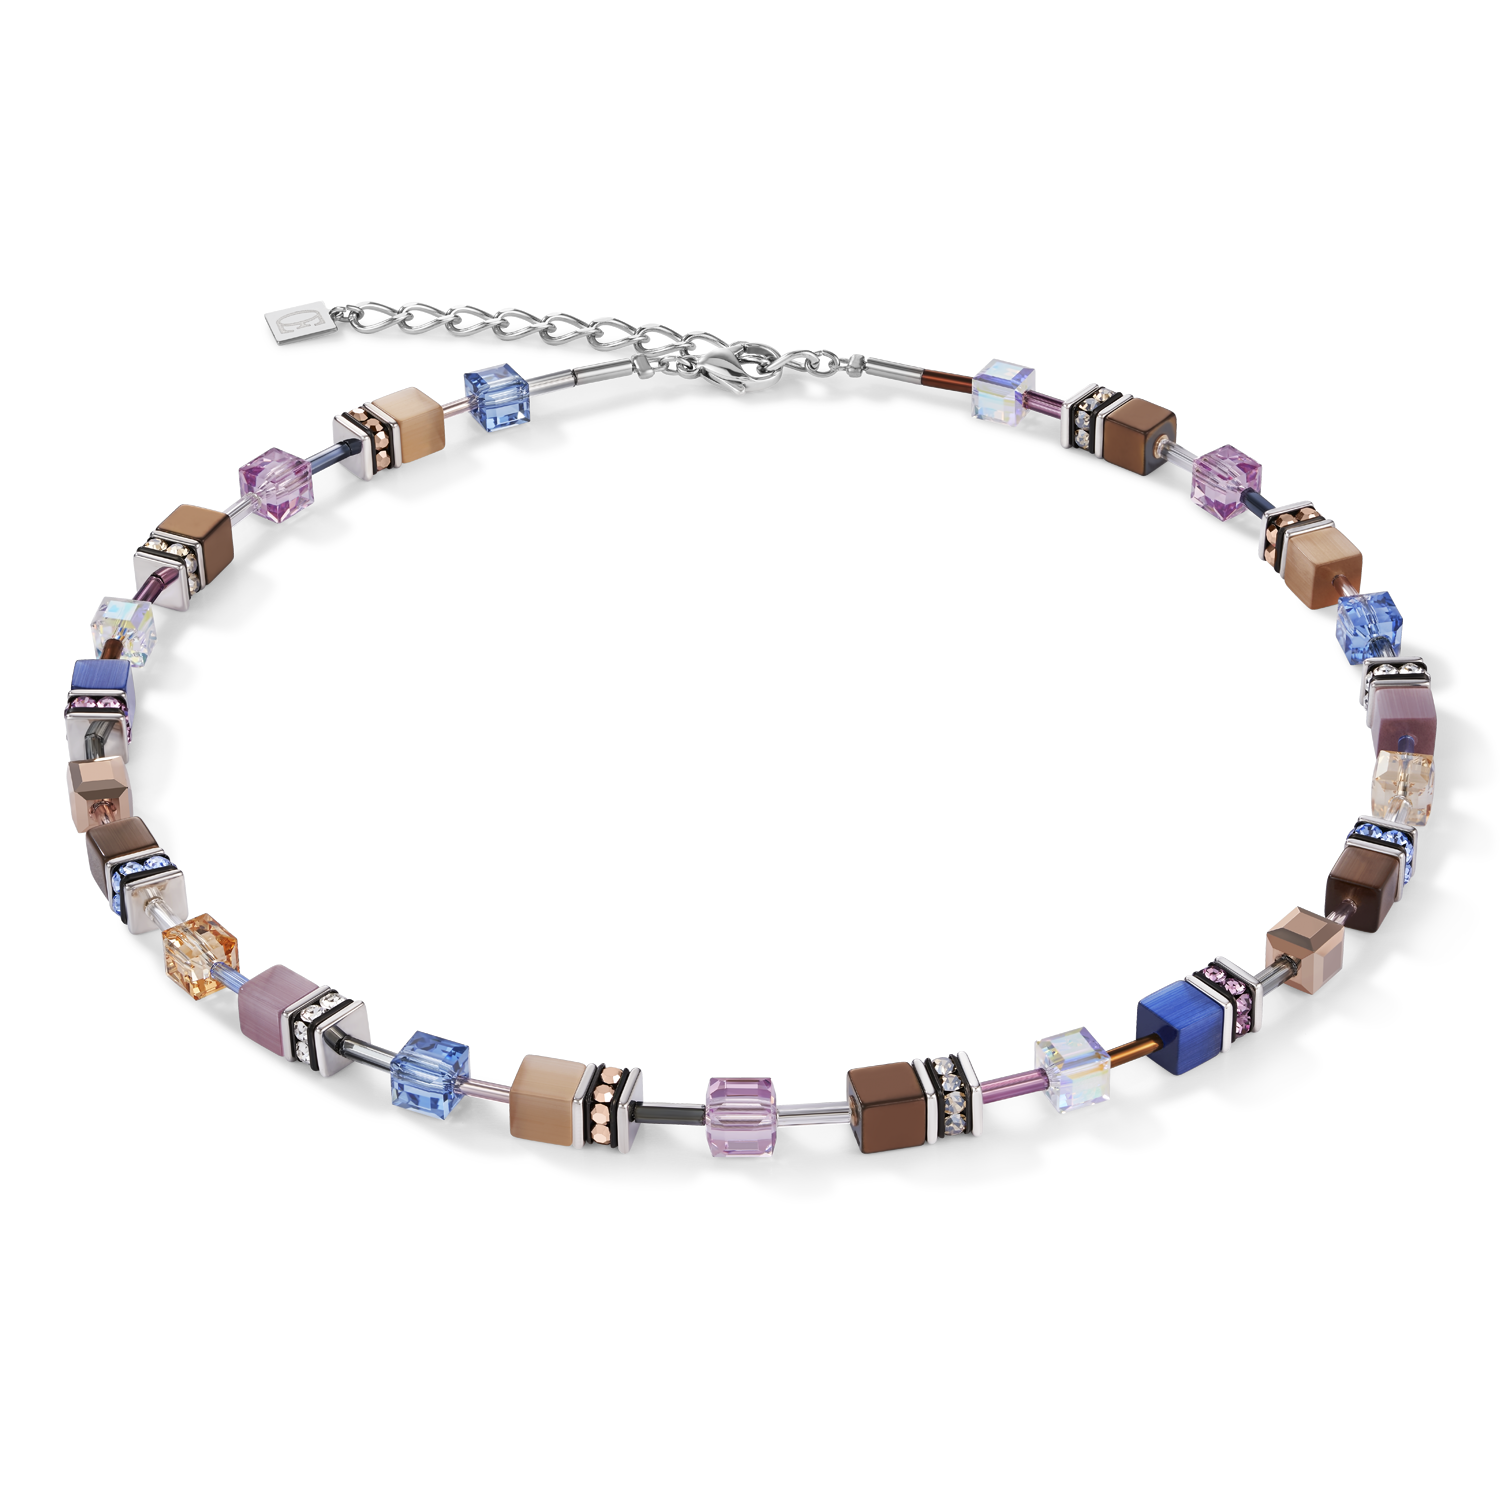 GeoCUBE® Necklace blue-brown-lilac